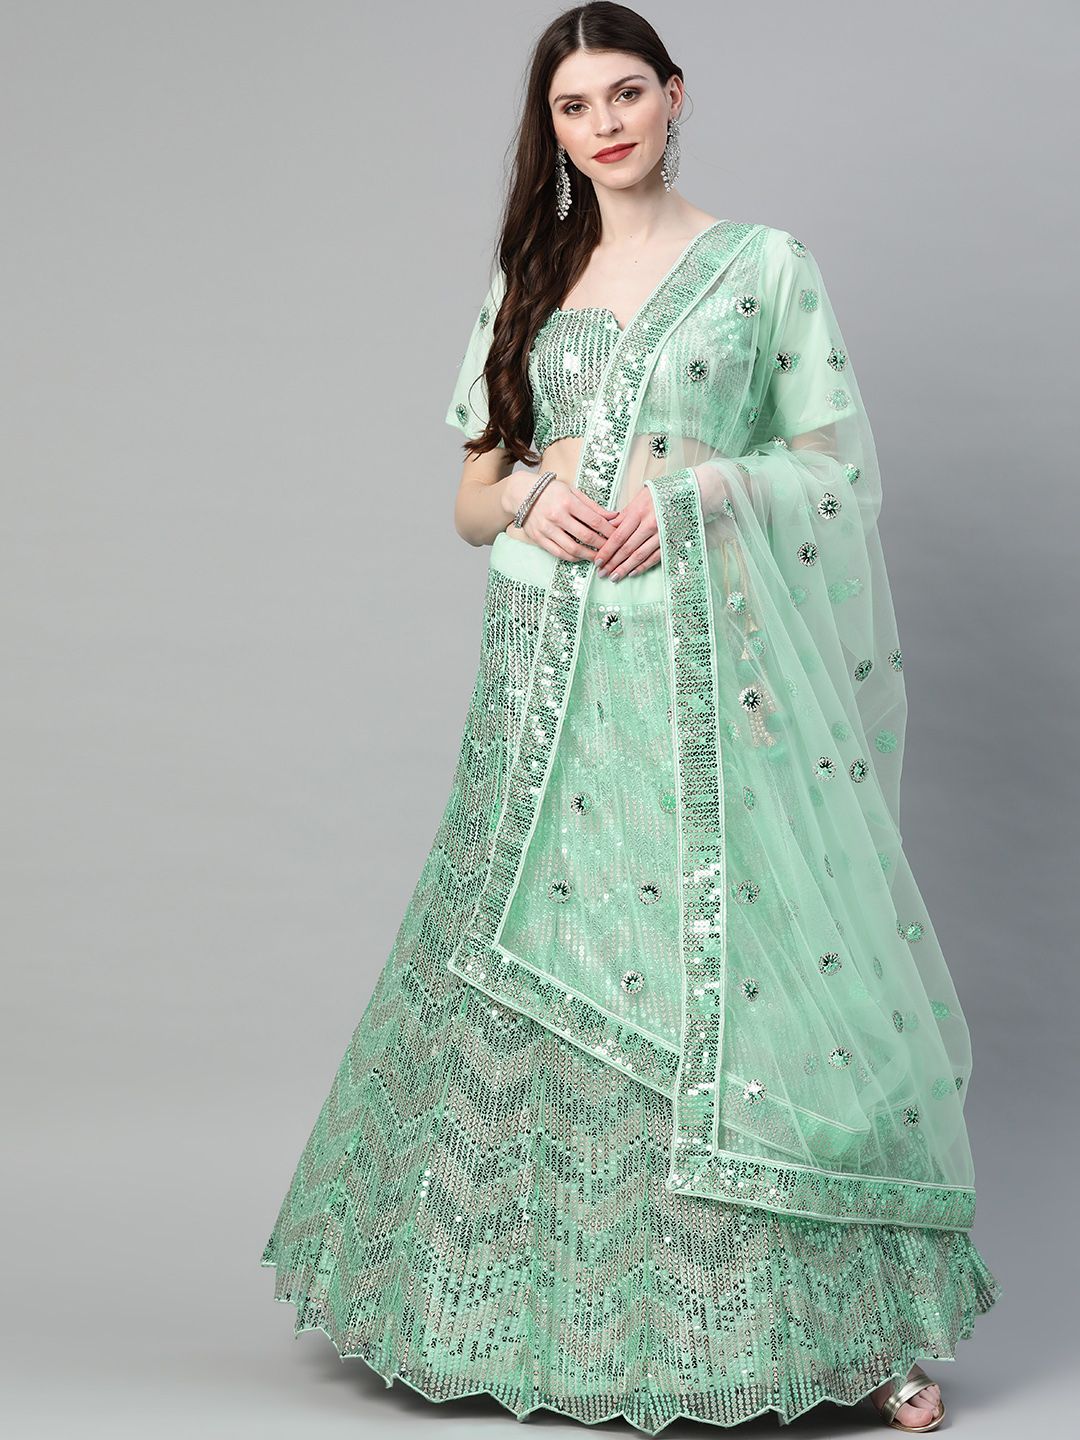 Readiprint Fashions Sea Green Semi-Stitched Lehenga & Unstitched Blouse with Dupatta Price in India